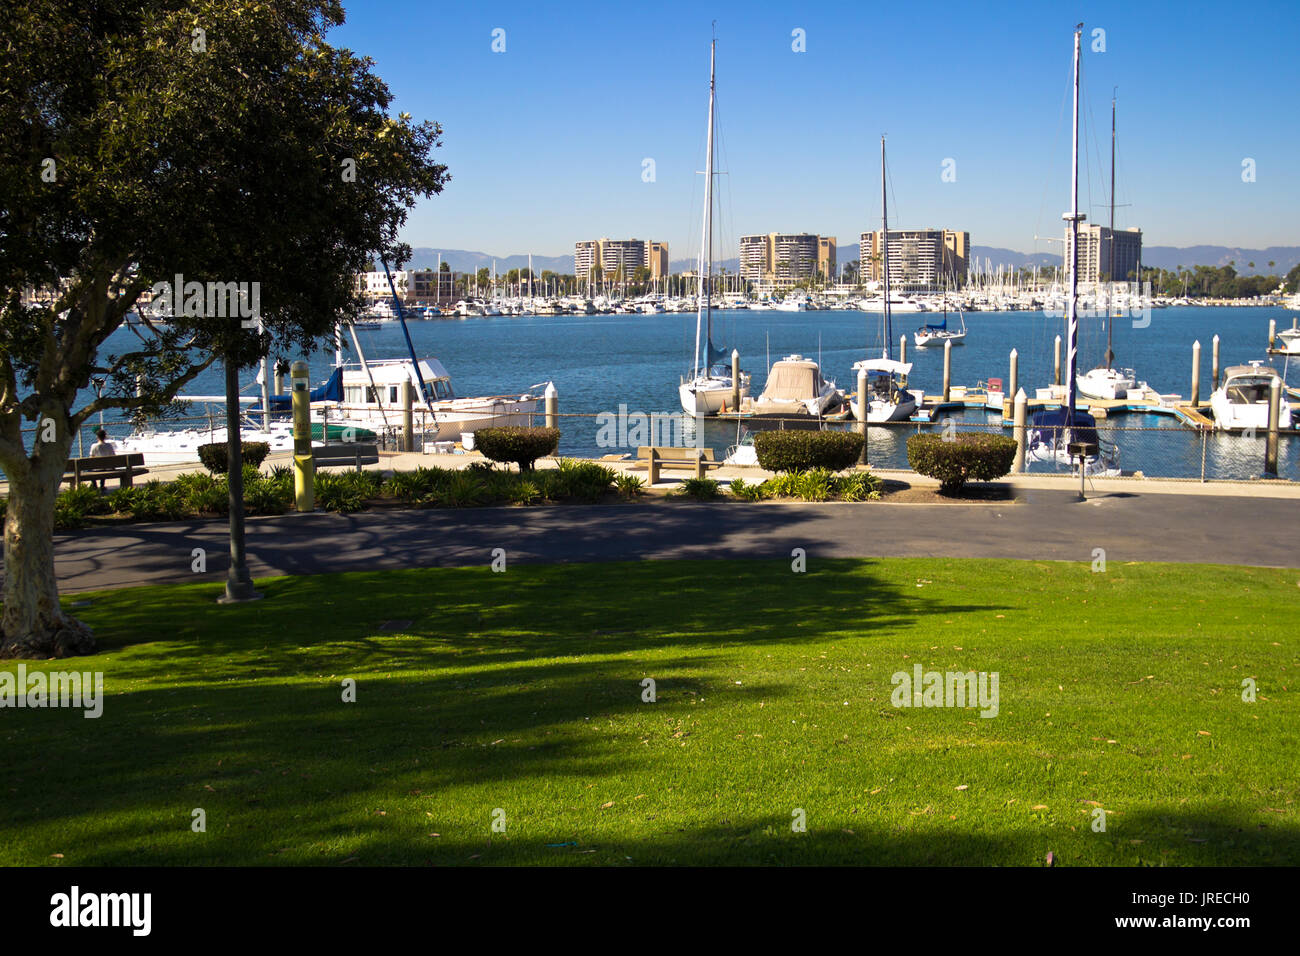 Shaded benches provide a view of the marina at Marina Del Rey, California. Stock Photo